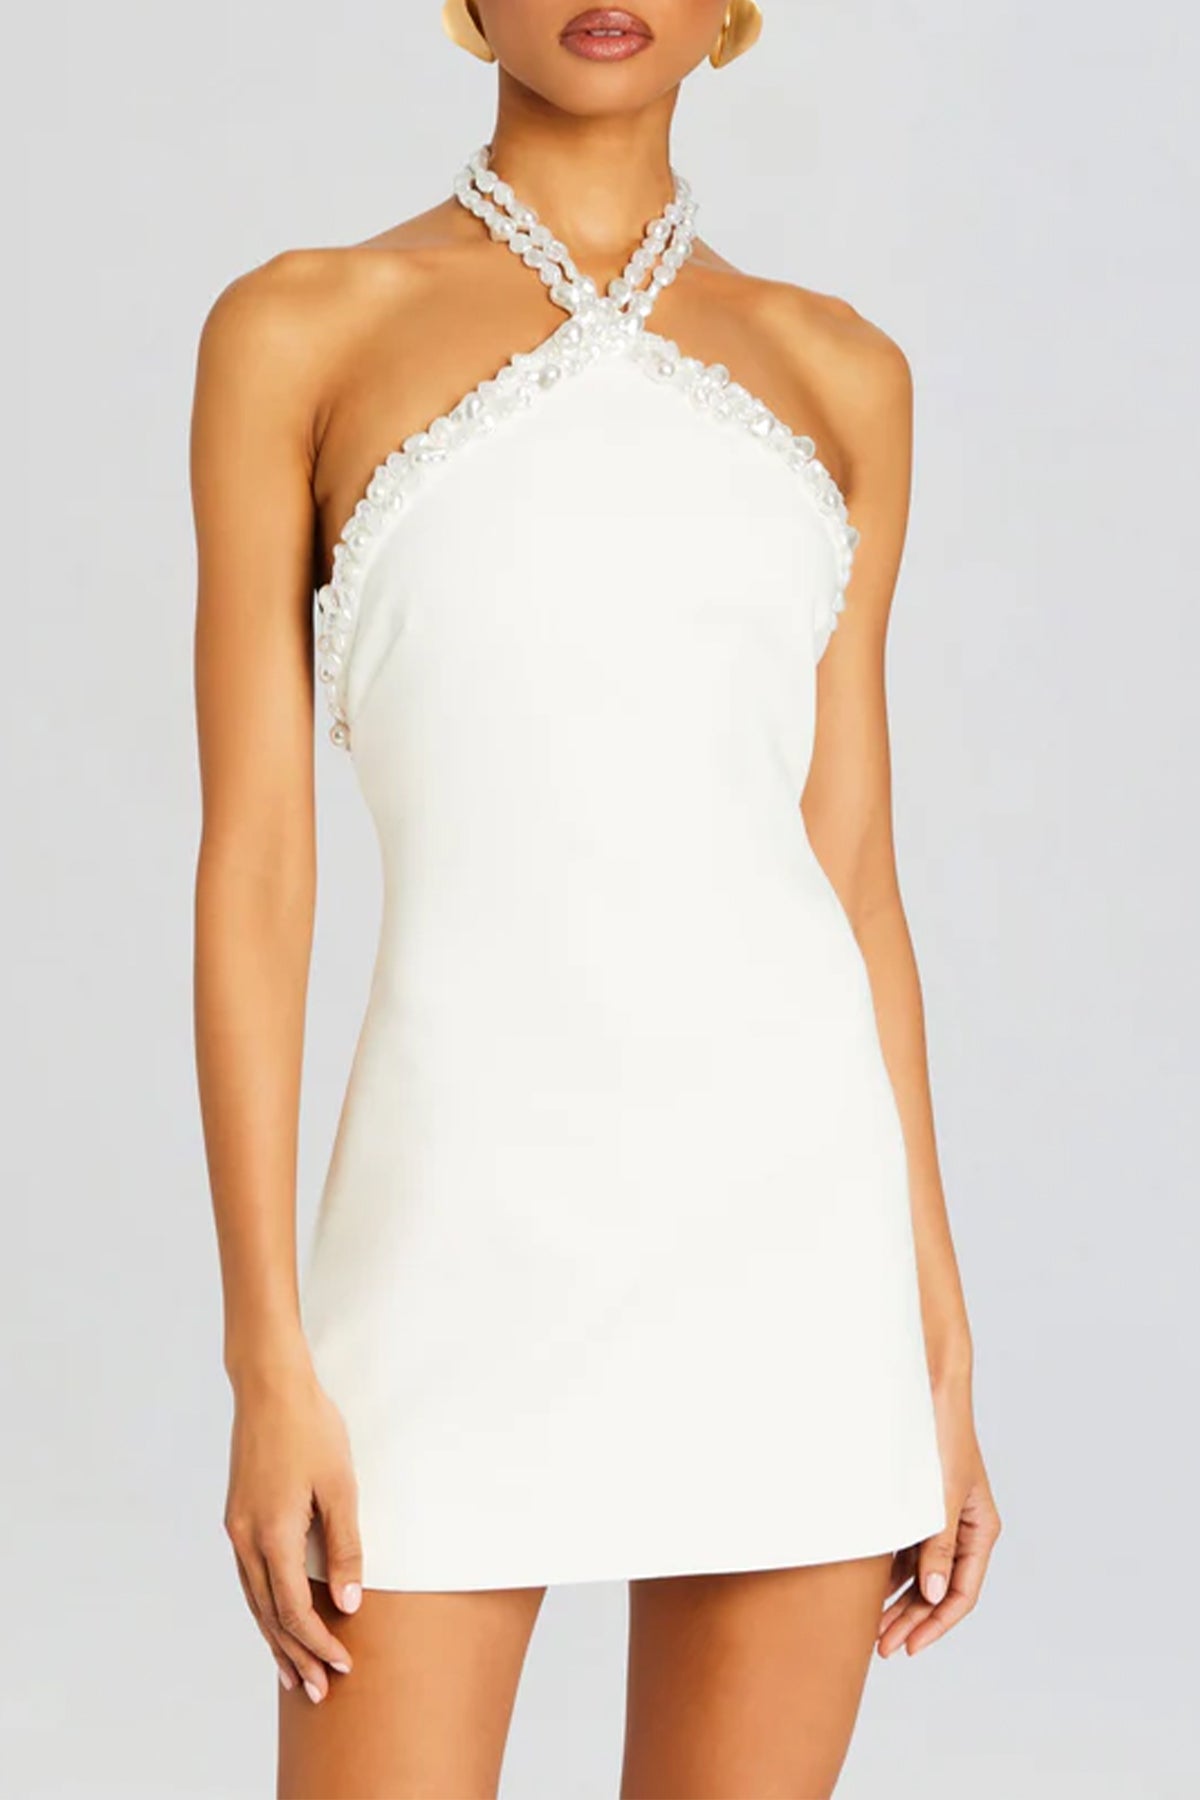 Kristi Pearl Embellished Dress in White - shop - olivia.com